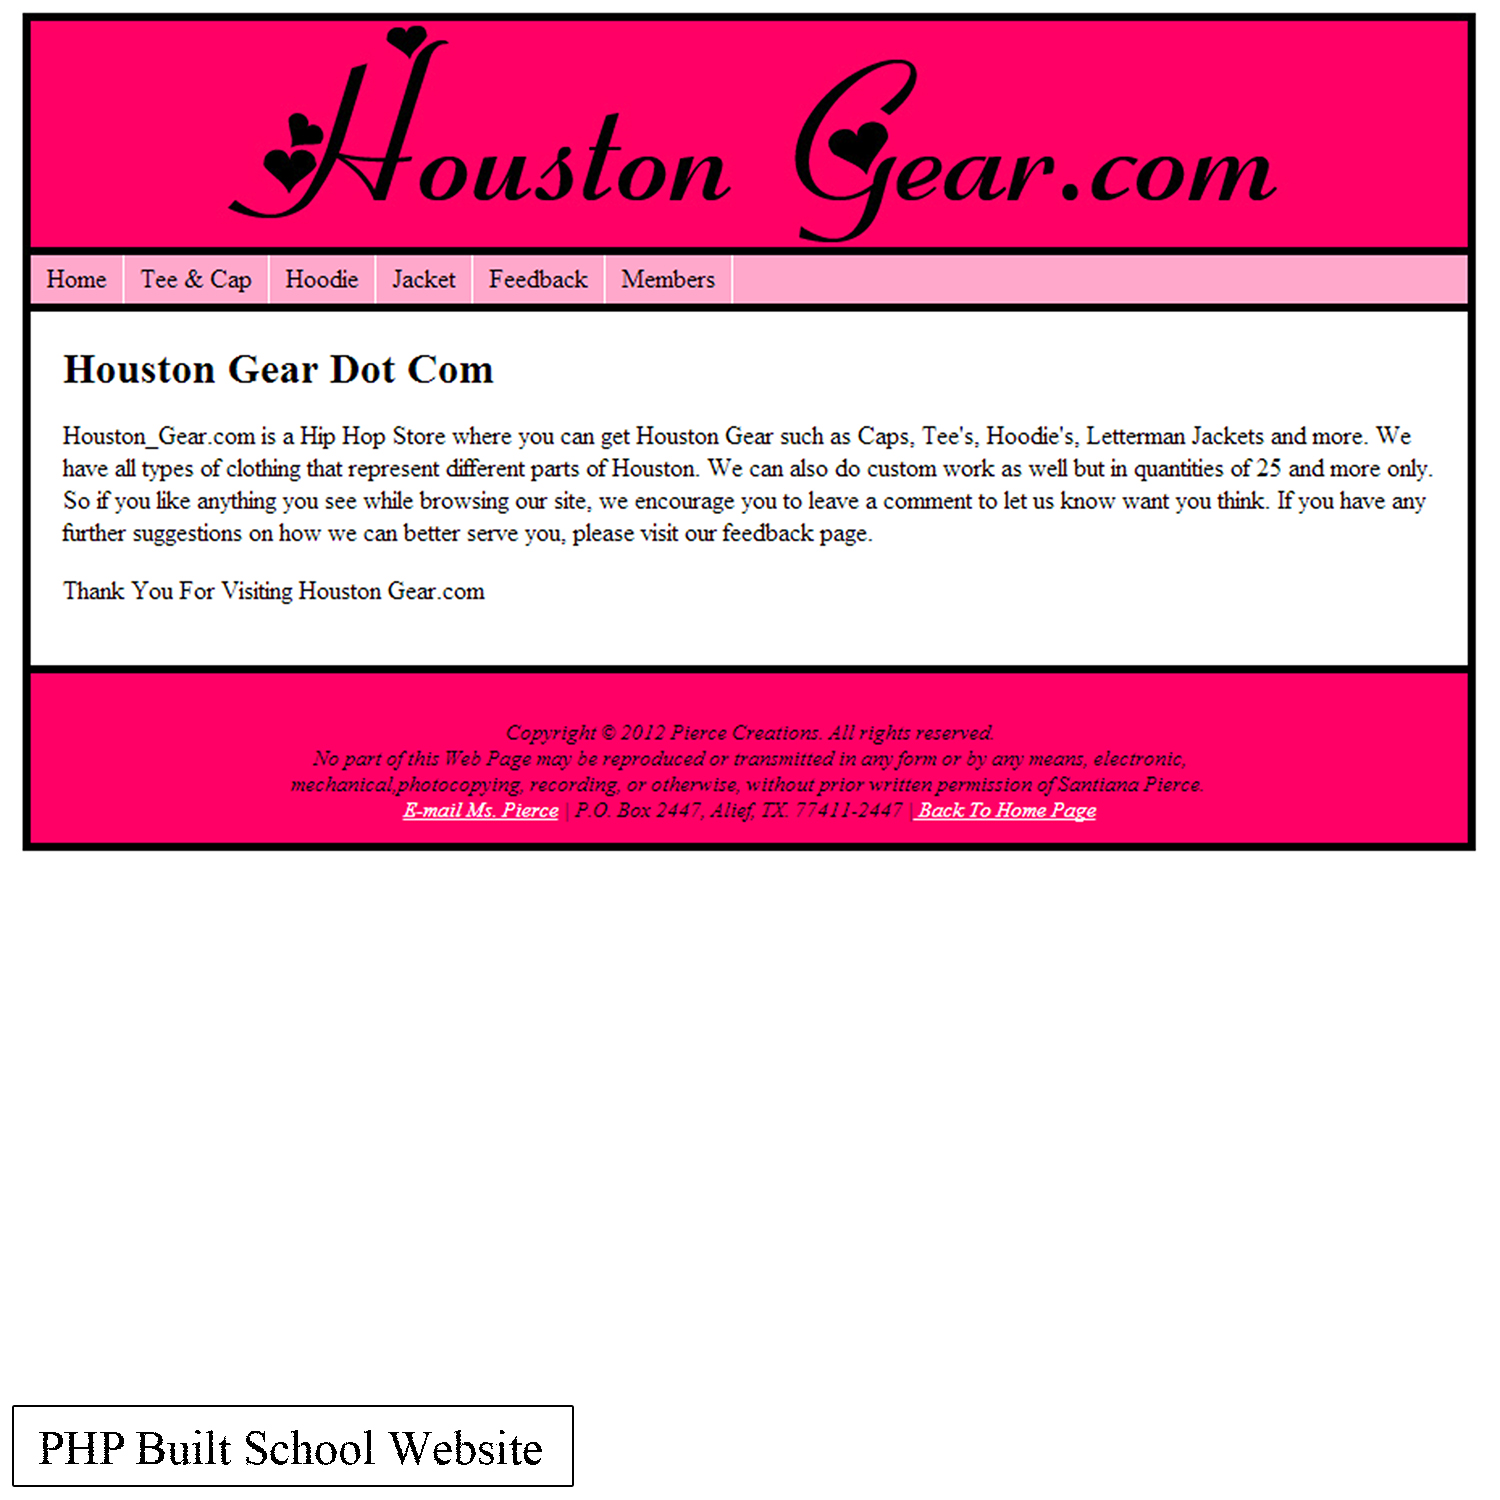 Image Screenshot of my PHP Class School Website 1 of